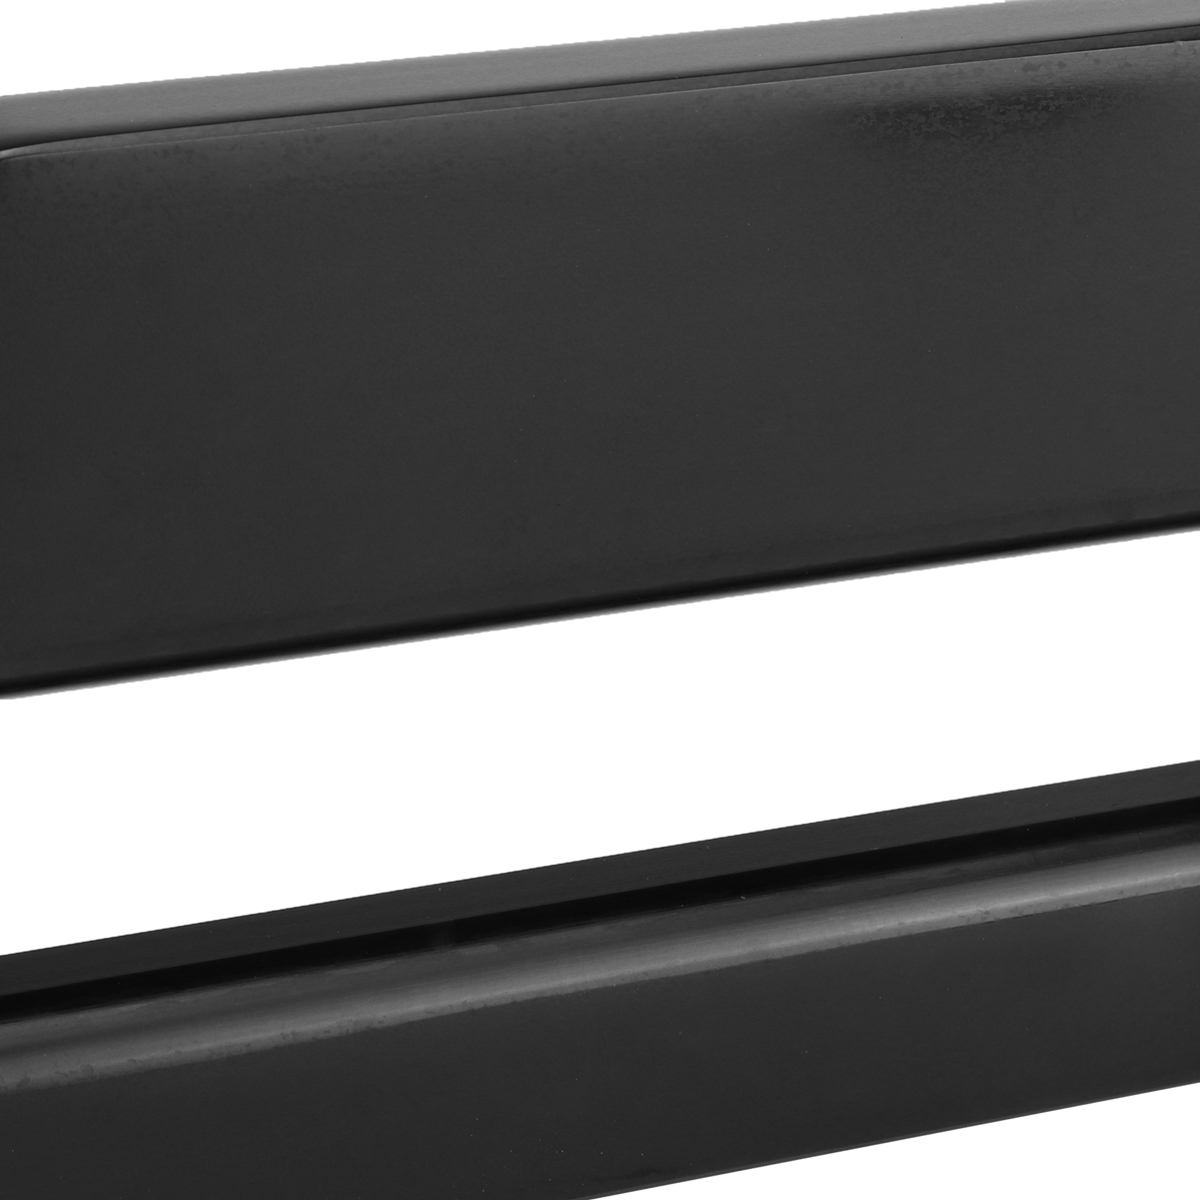 300mm Universal Alumimum Hawse Fairlead Black Hawse Fairlead For Synthetic Winch Rope Cable Guide 6000lbs For SUV ATV UTV